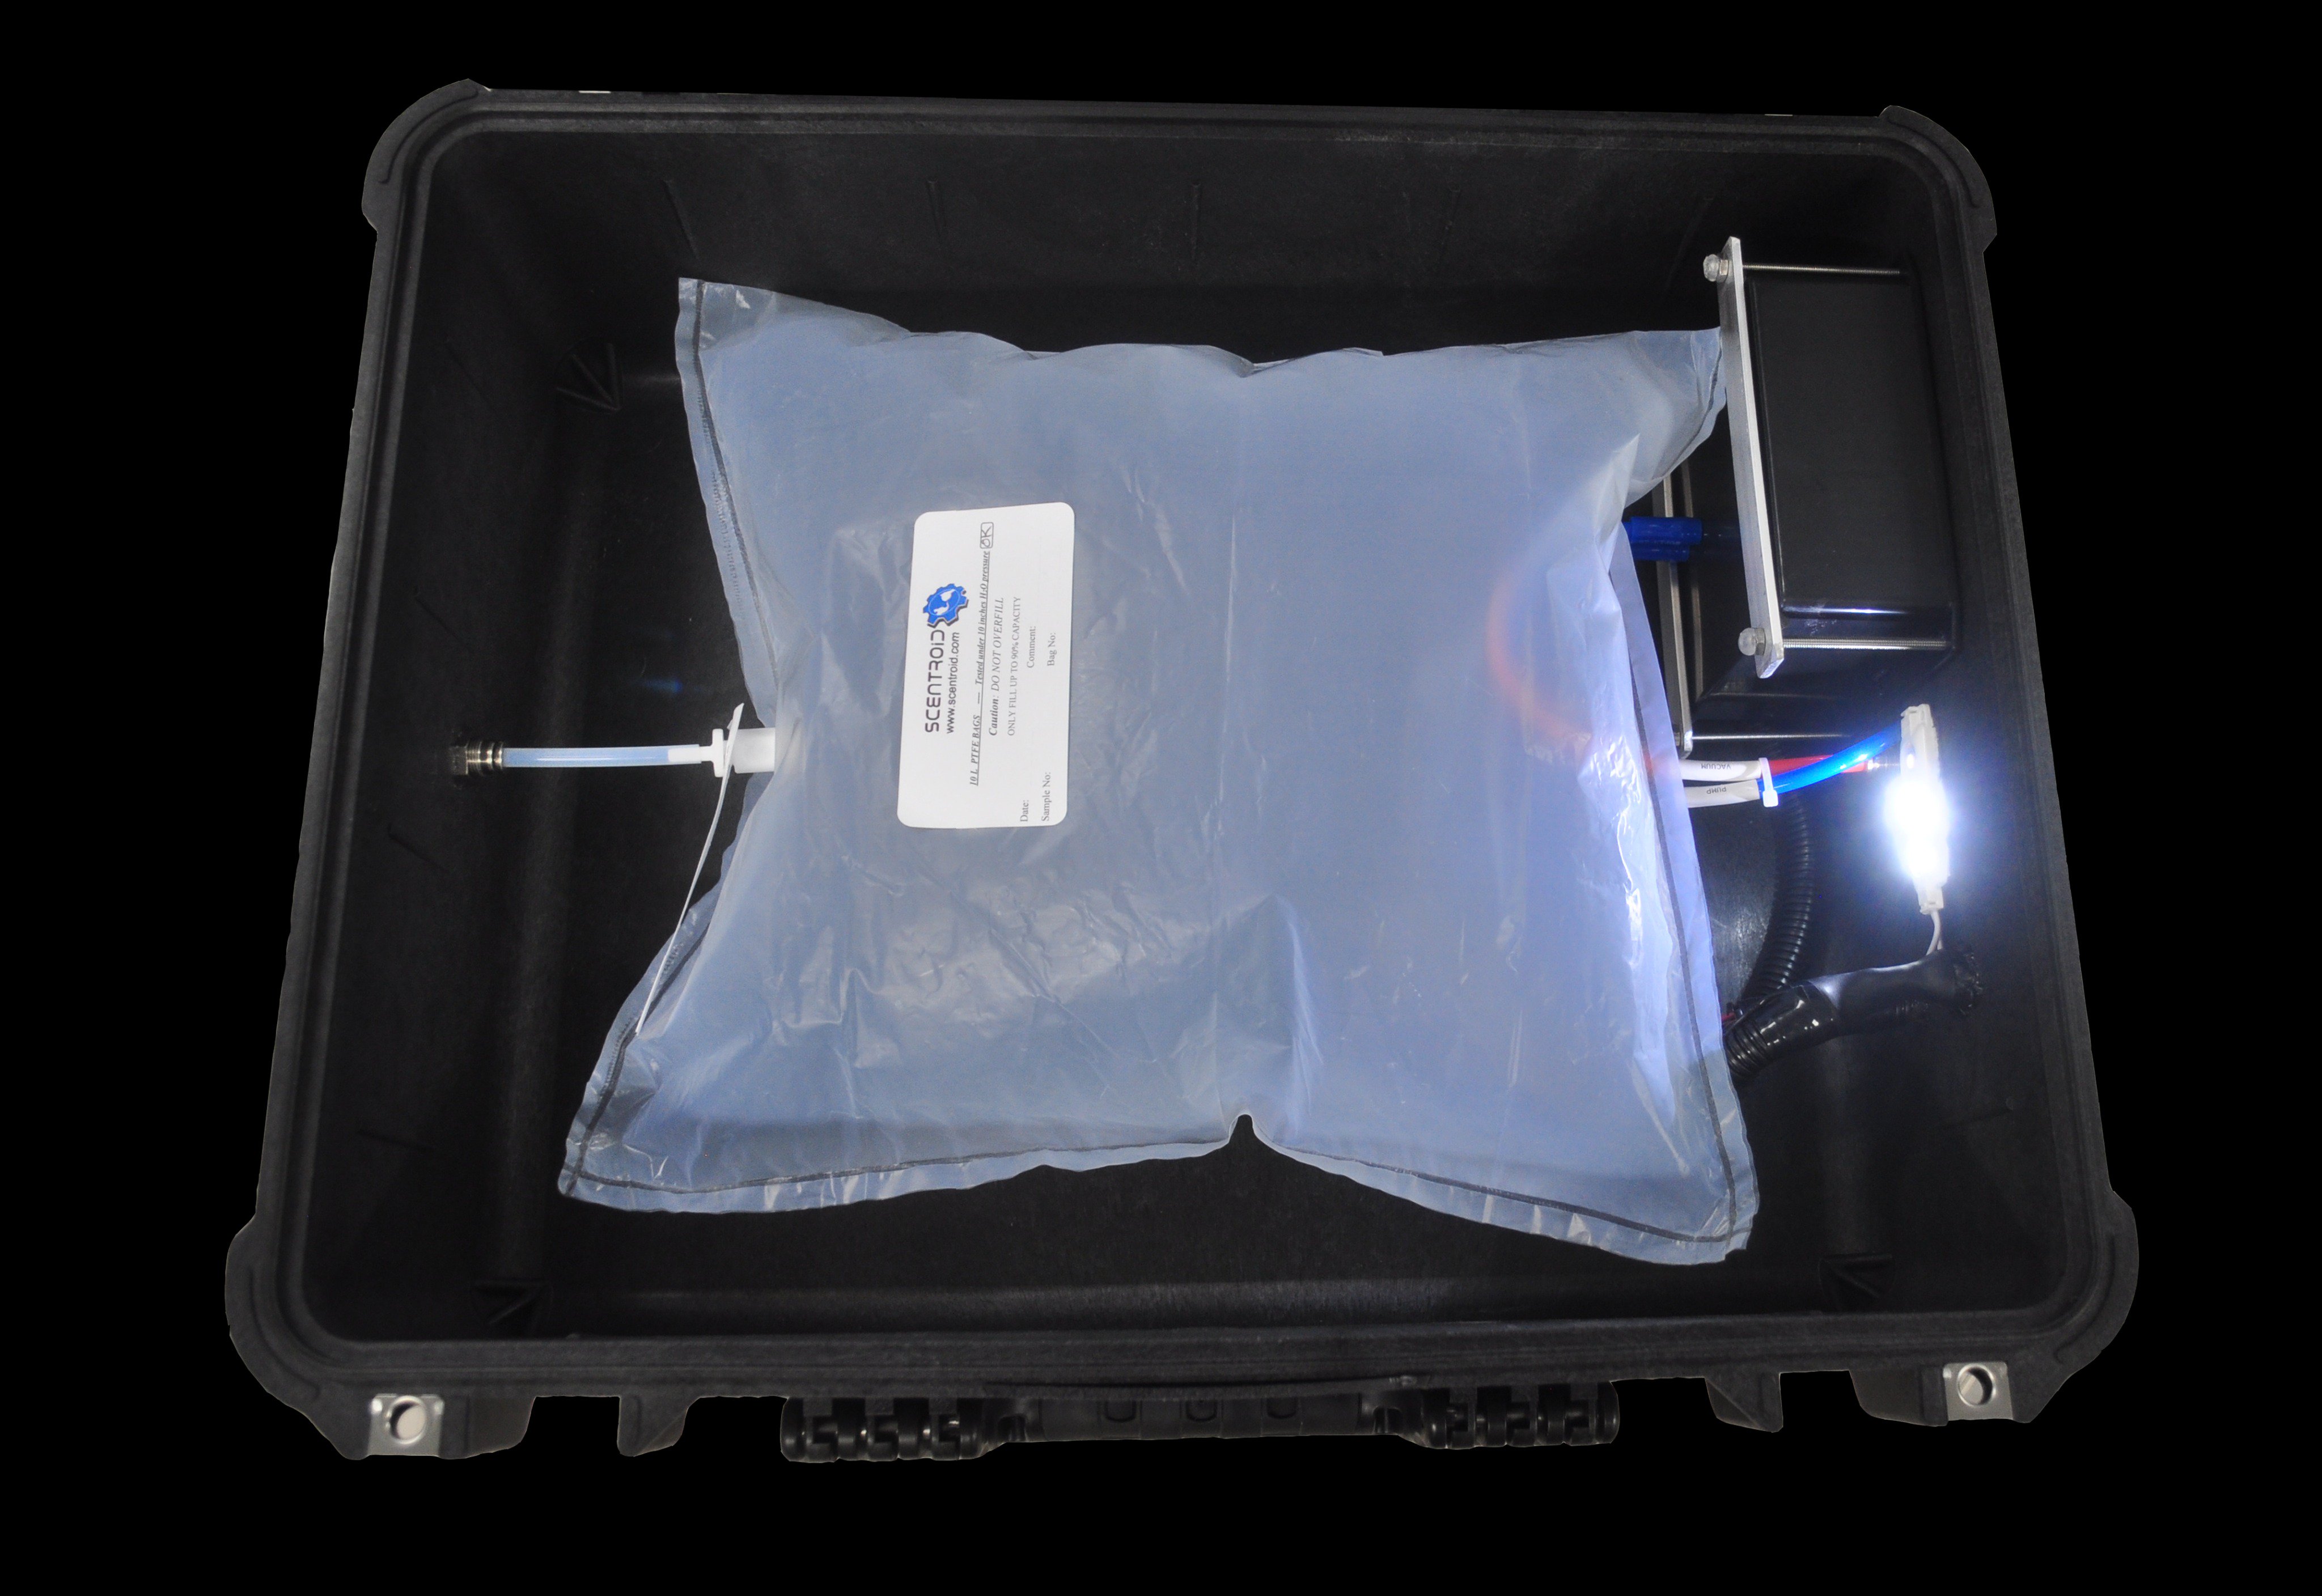 PTFE Sampling Bags - Scentroid